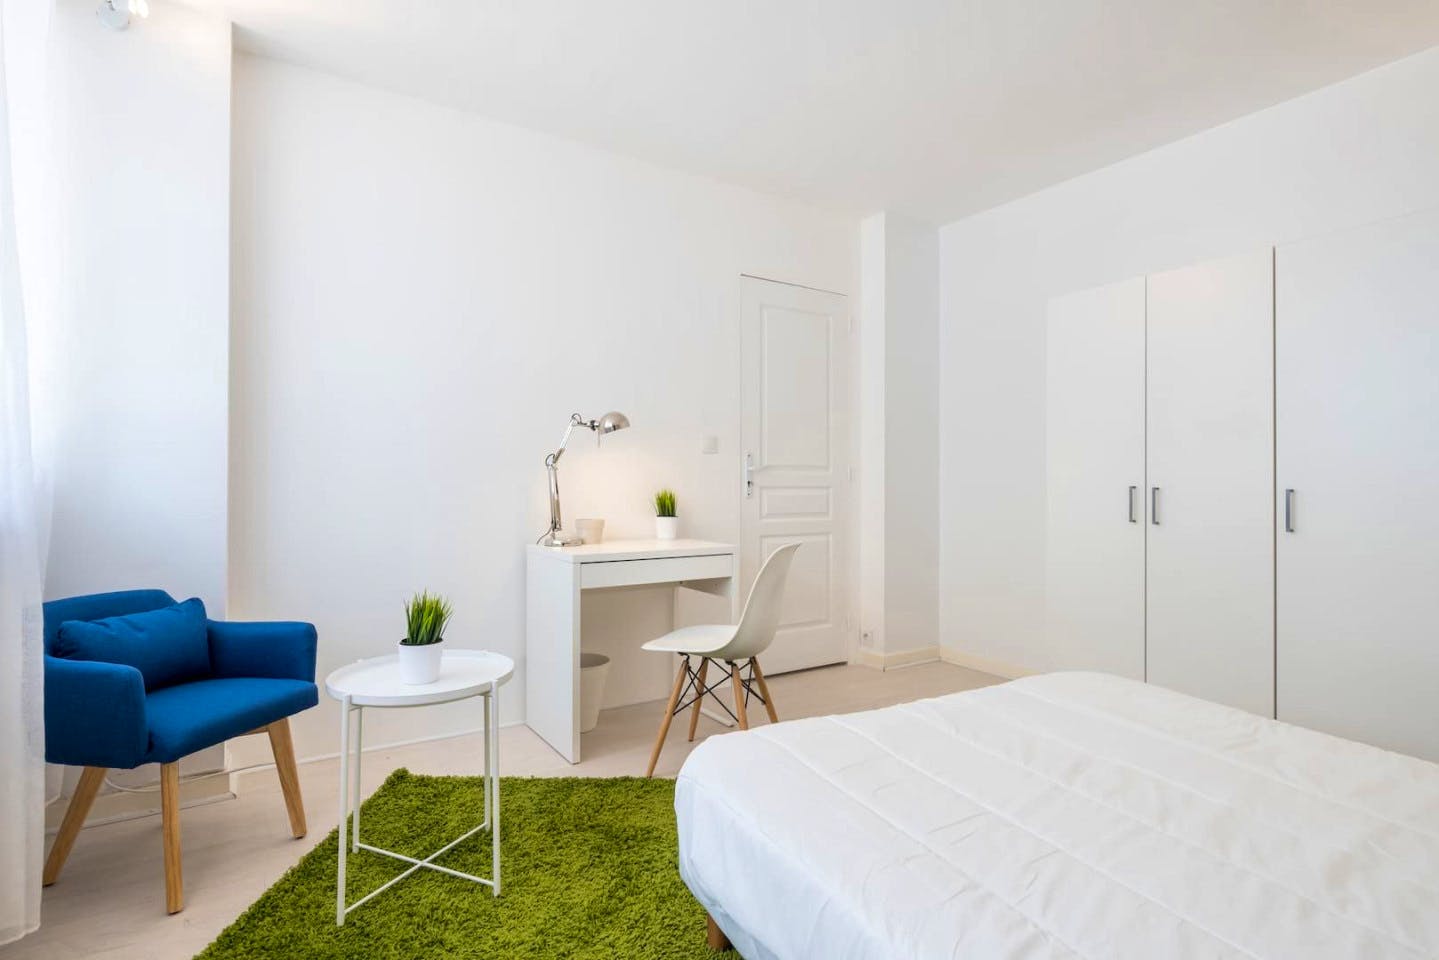 5-Bed Apartment on Rue Saint-Sidoine